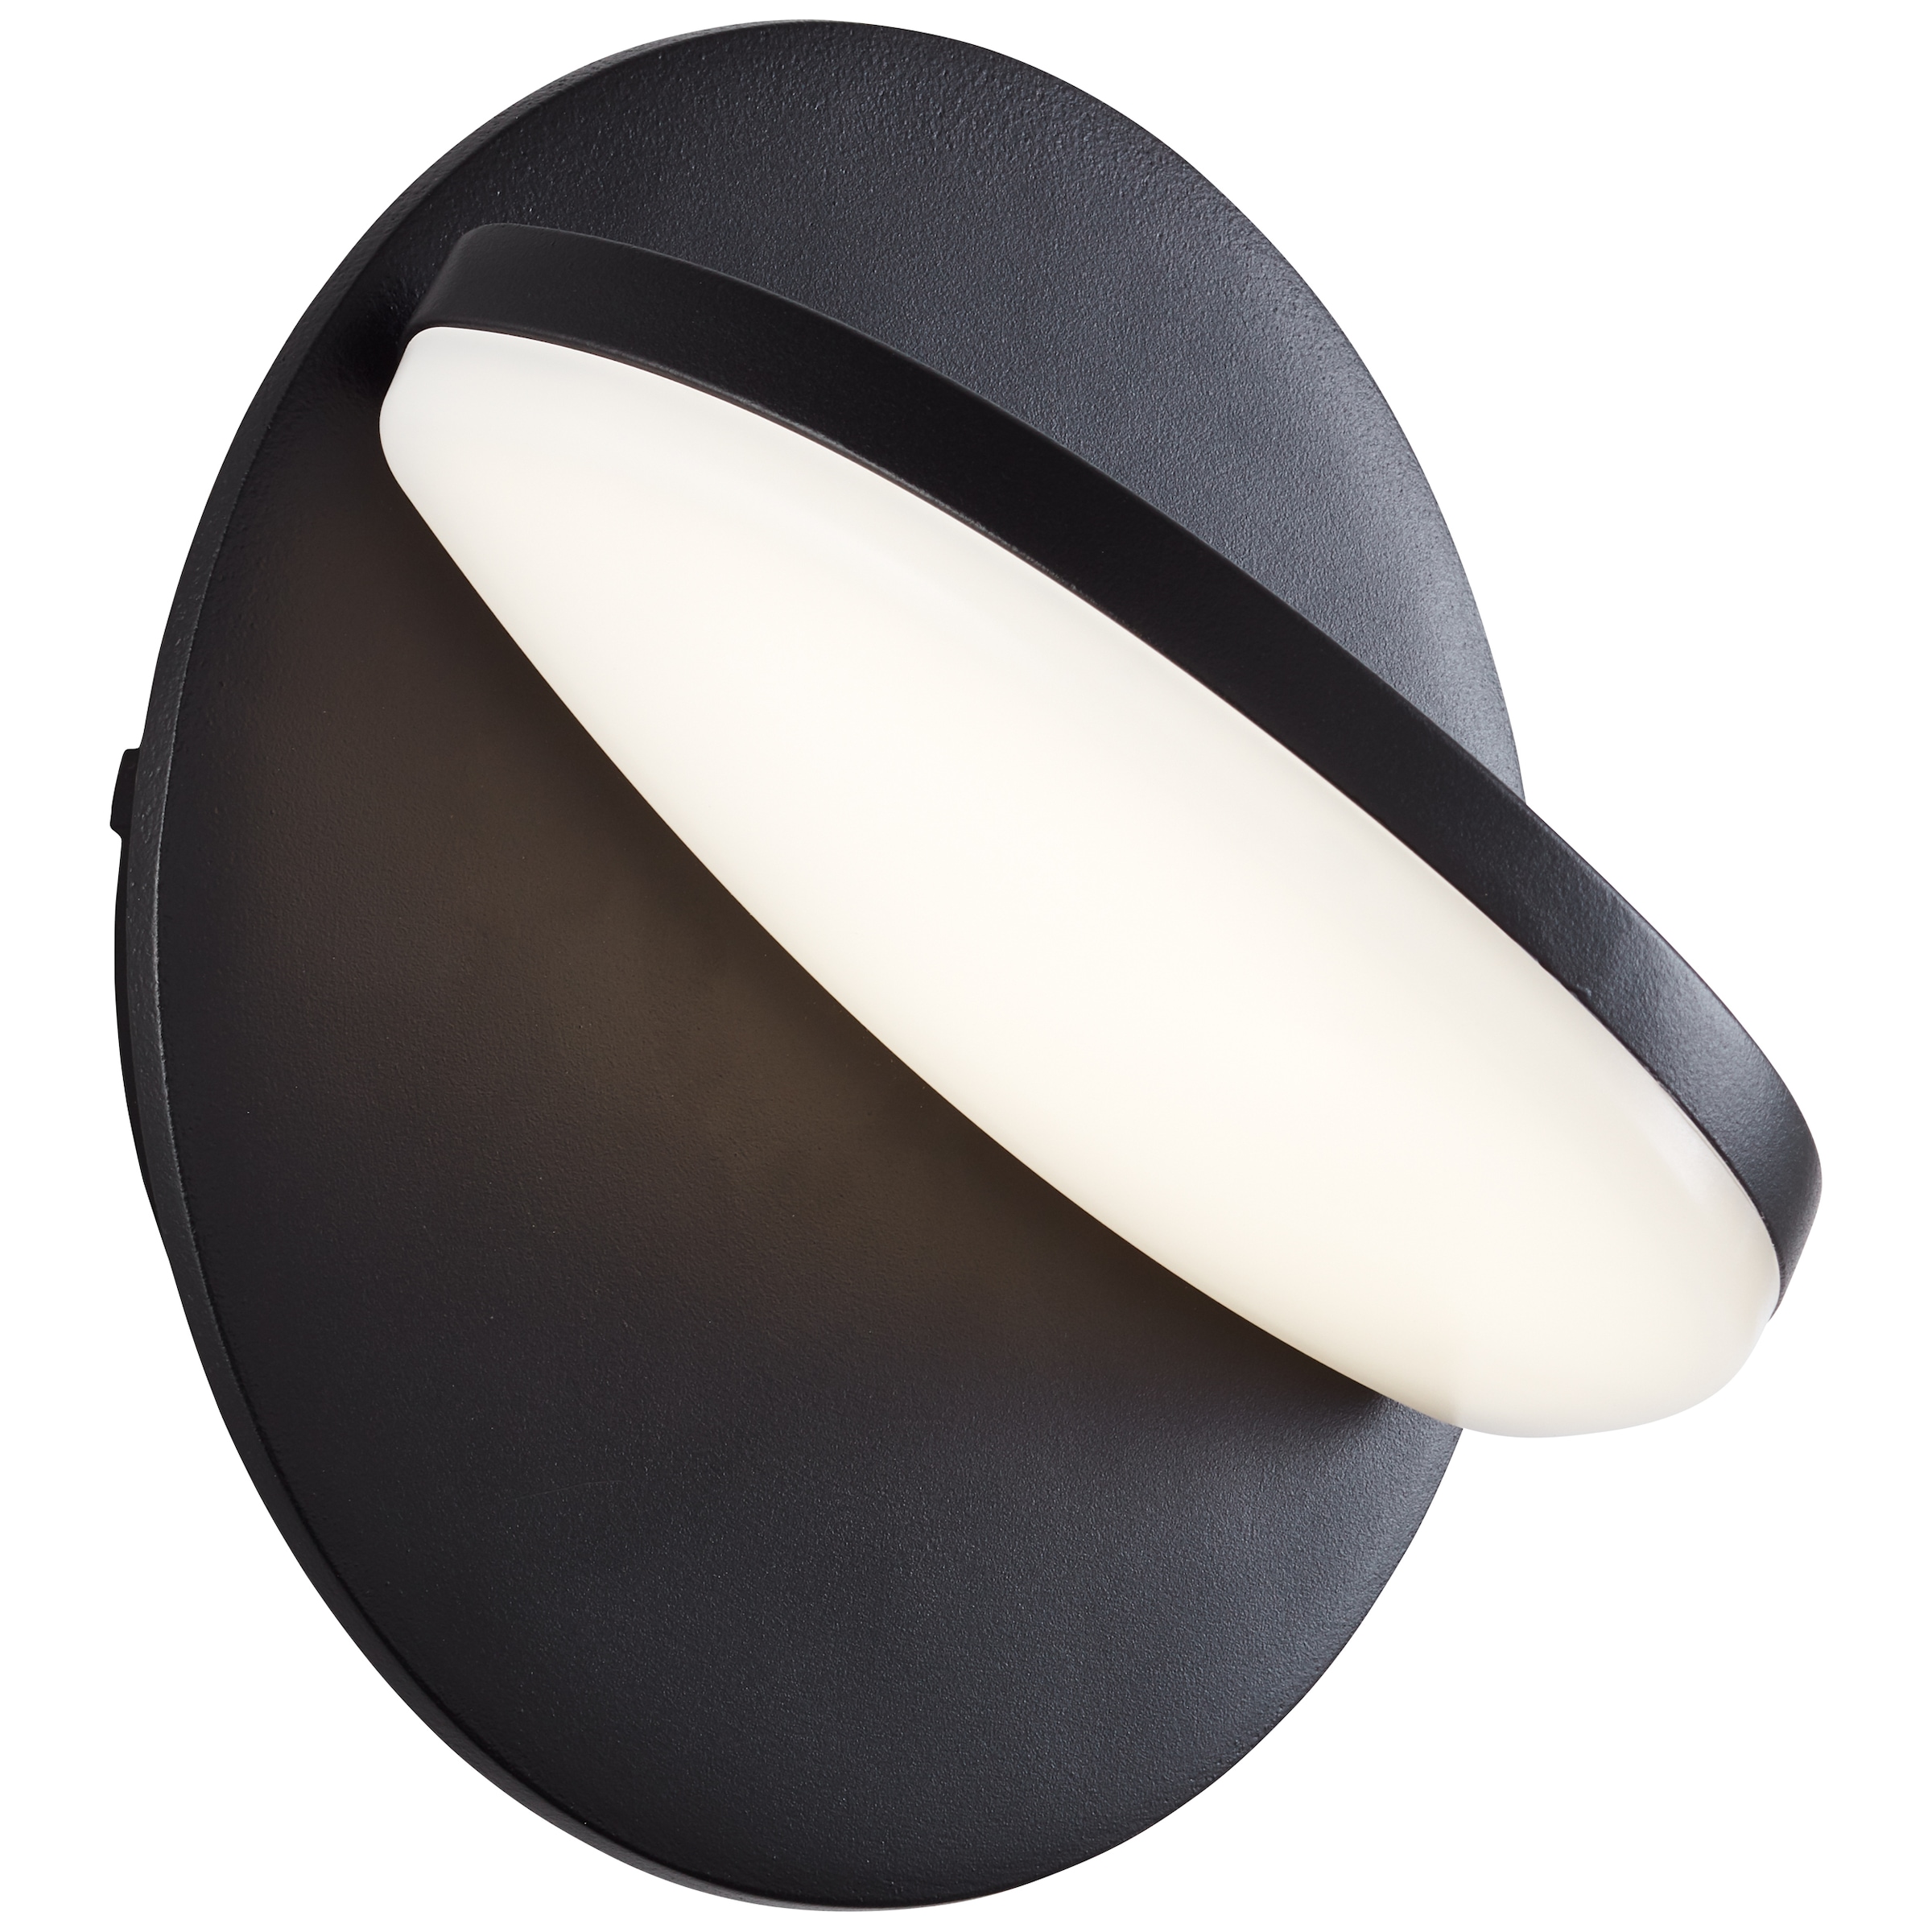 Brilliant LED Wandleuchte »Soare«, 2000 lm, Ø 18,5 cm, Metall/Kunststoff, schwarz/weiß